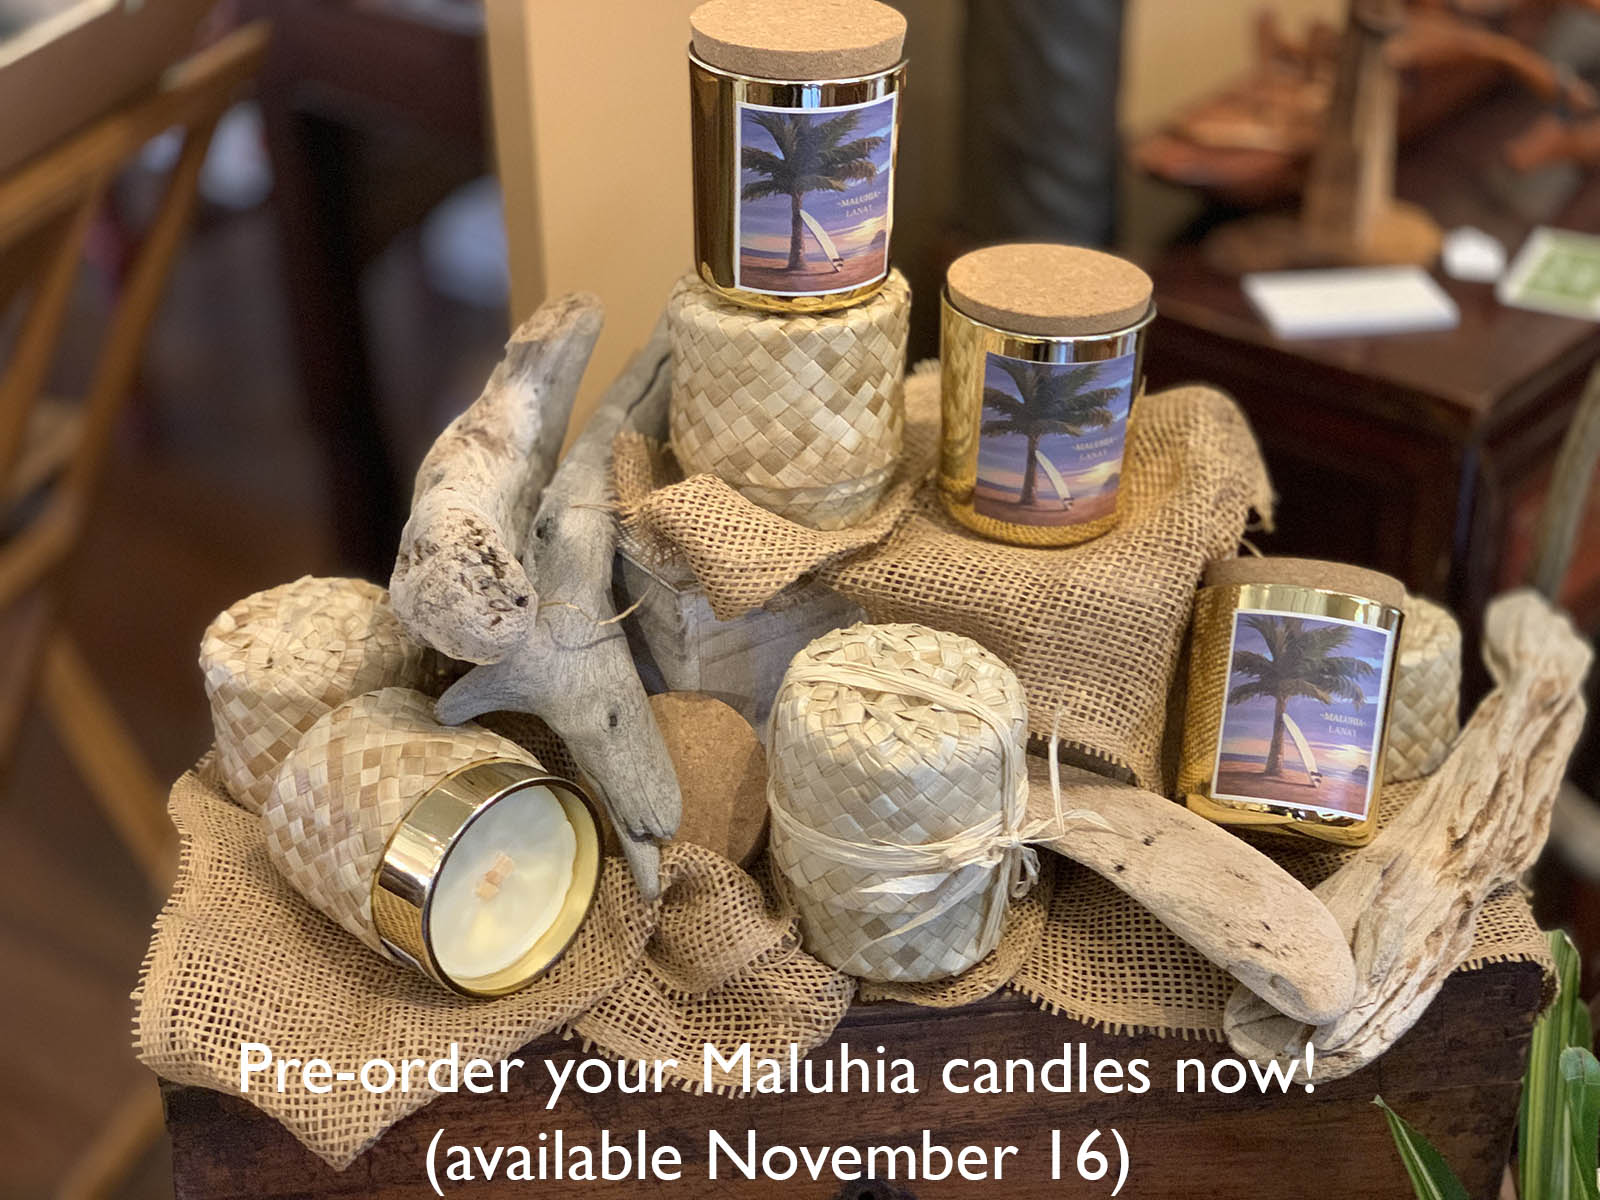 Maluhia Lāna'i Gold Glass Candles